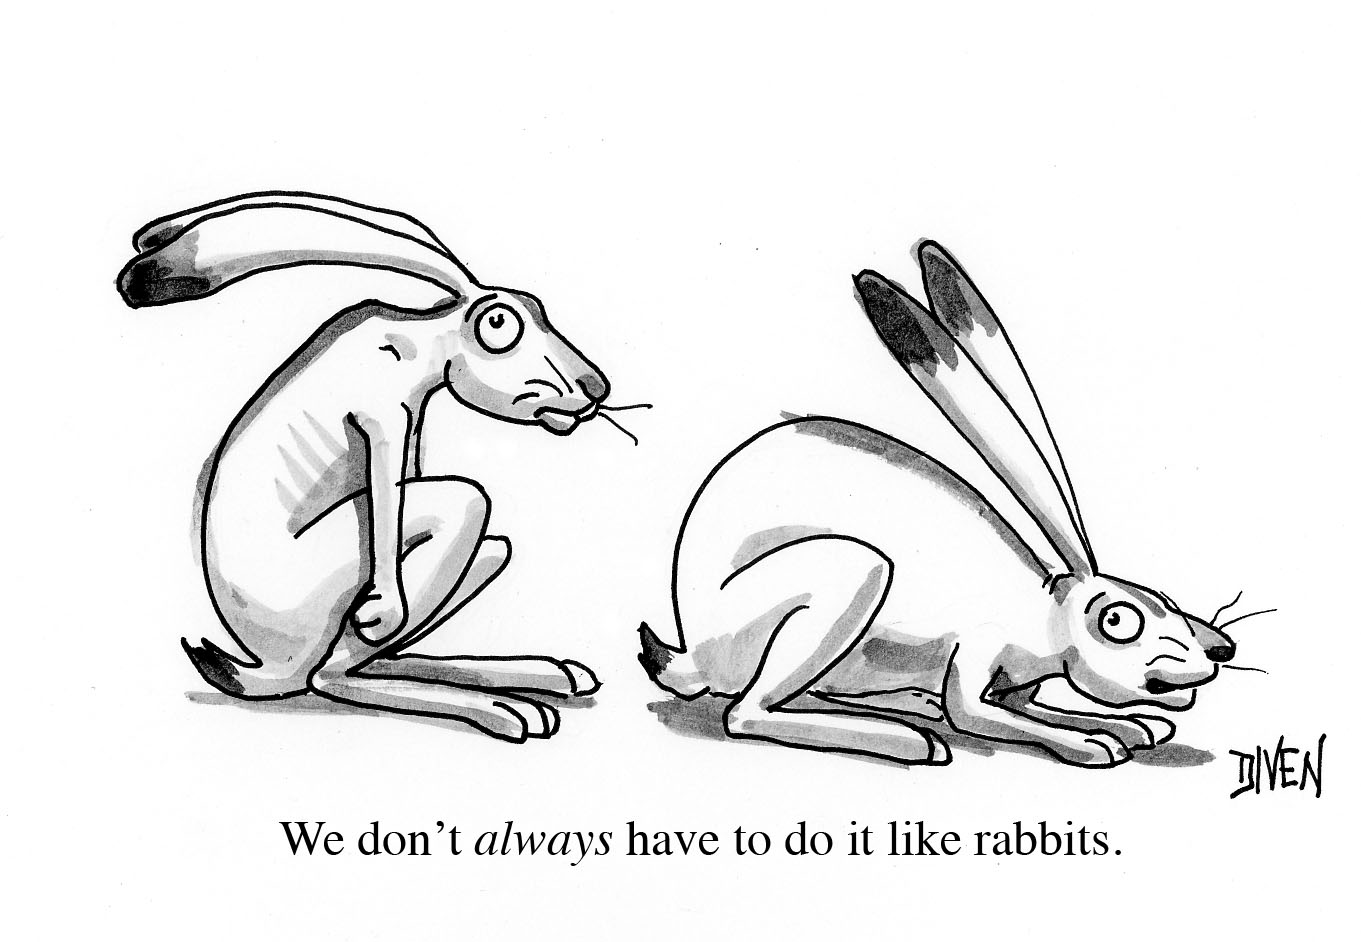 Заяц карикатура